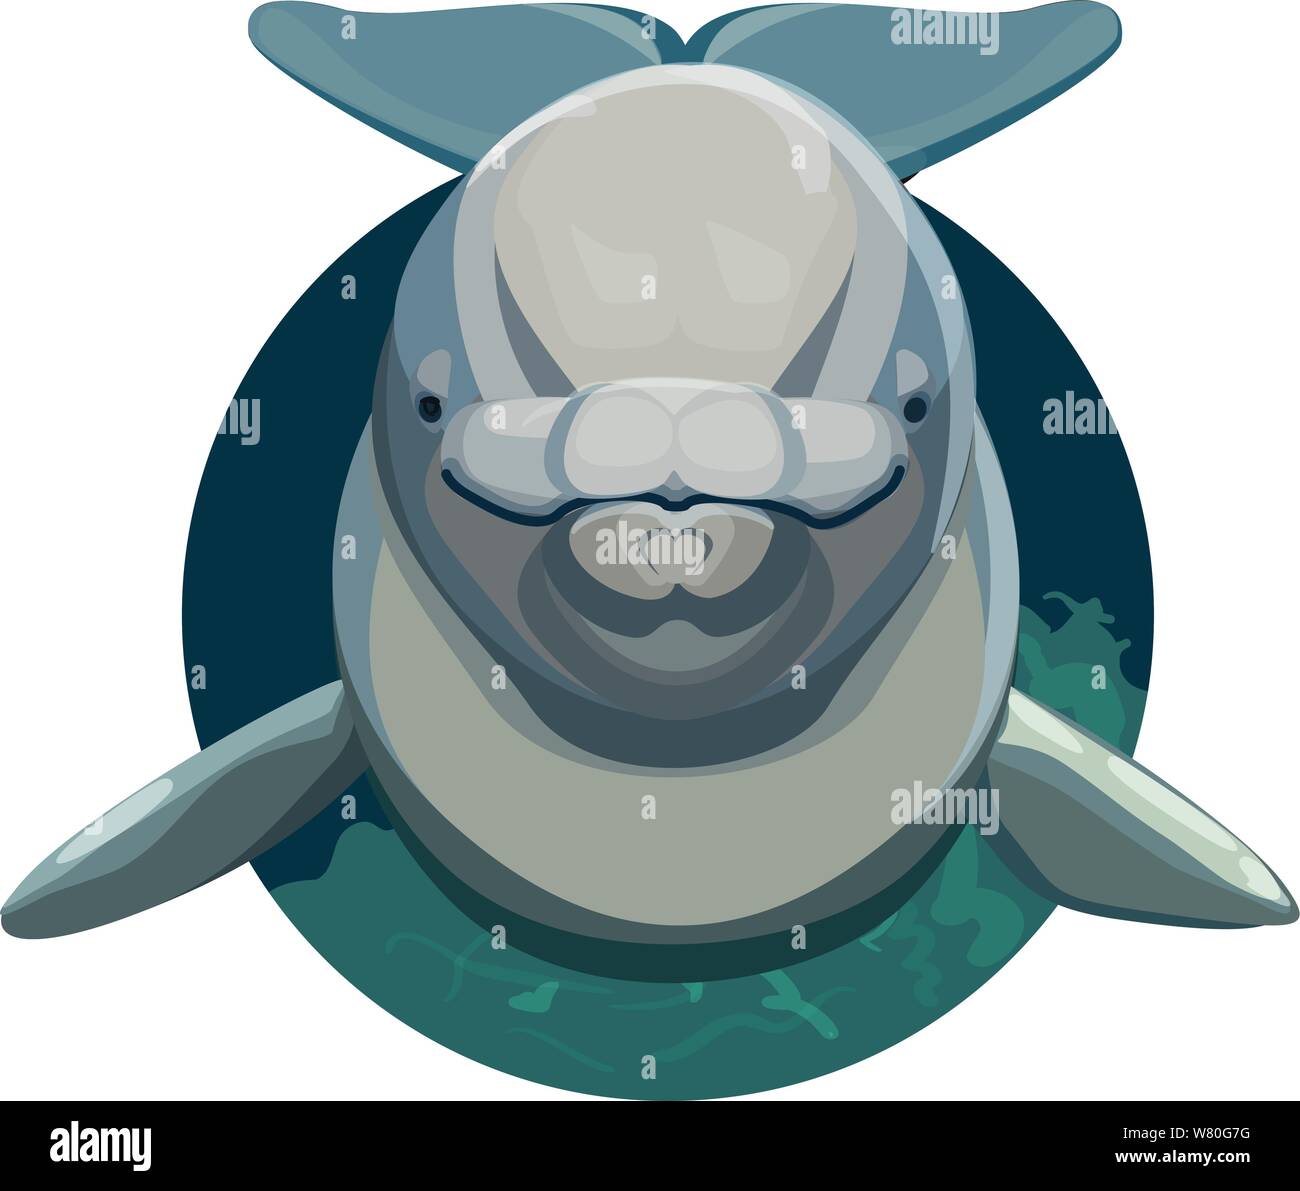 Beluga whale face on in a circular logo like fashion Stock Vector